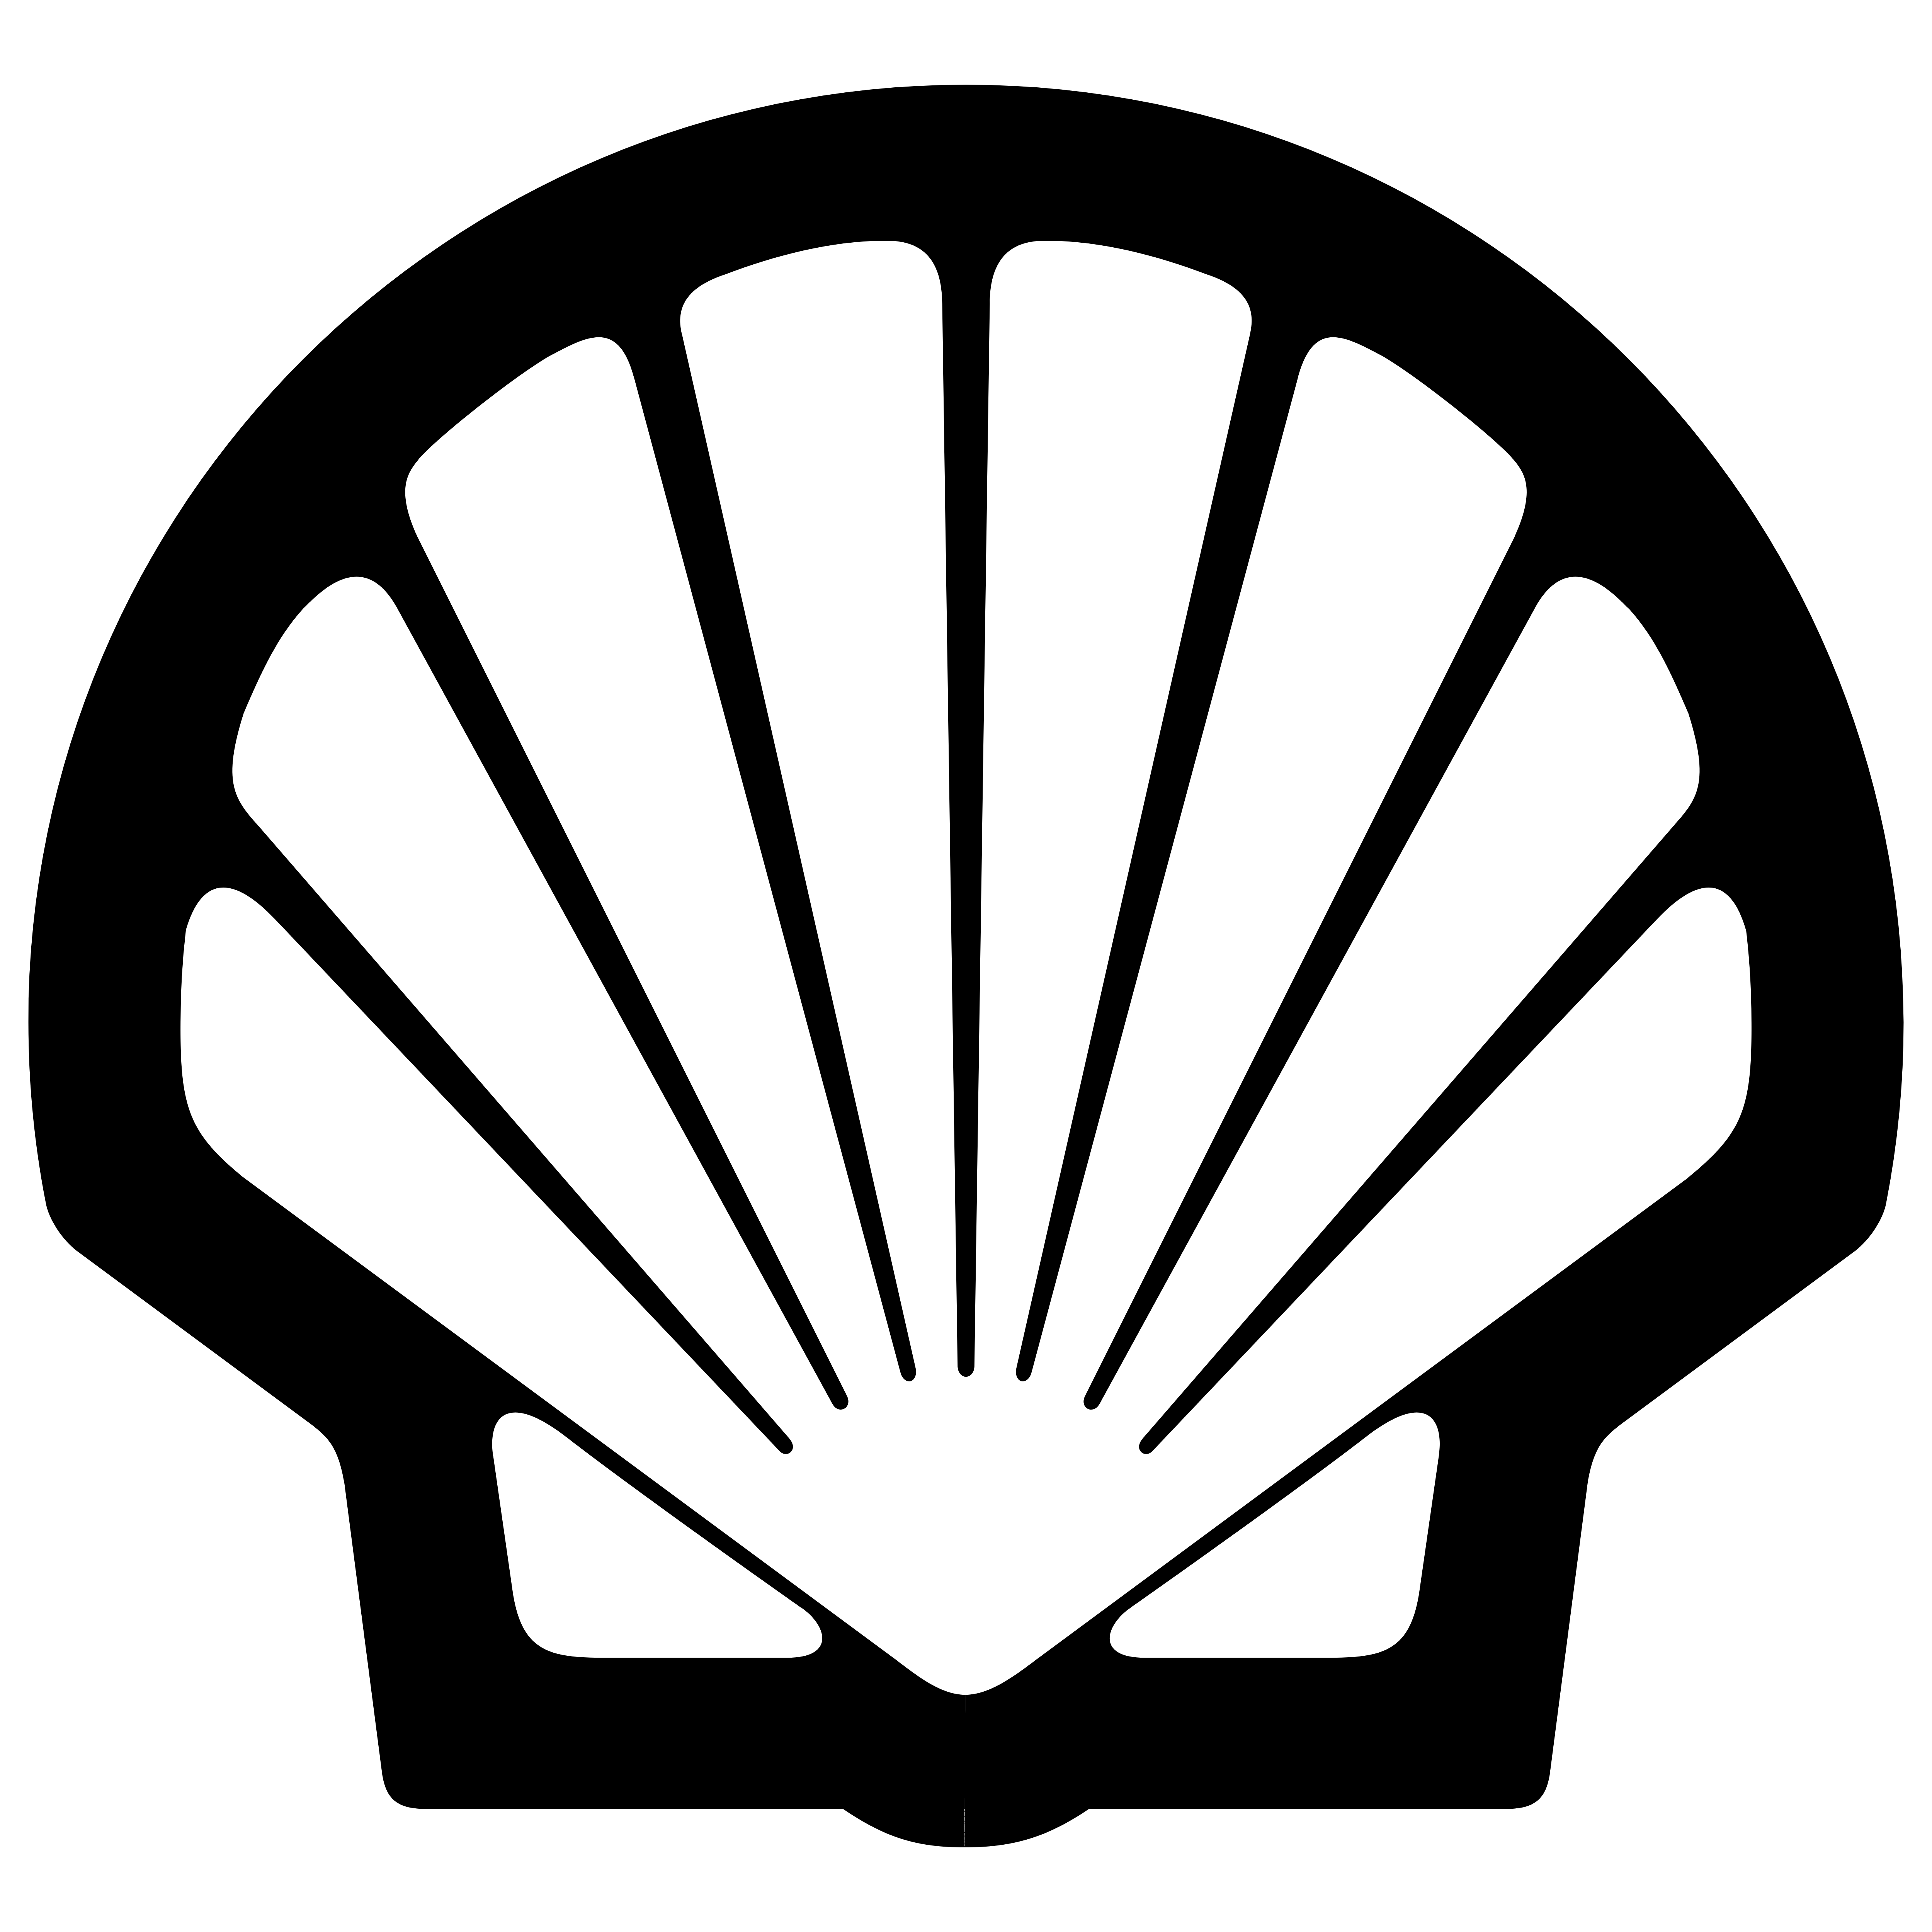 Shell Logo Hd | Wallpaper Bac